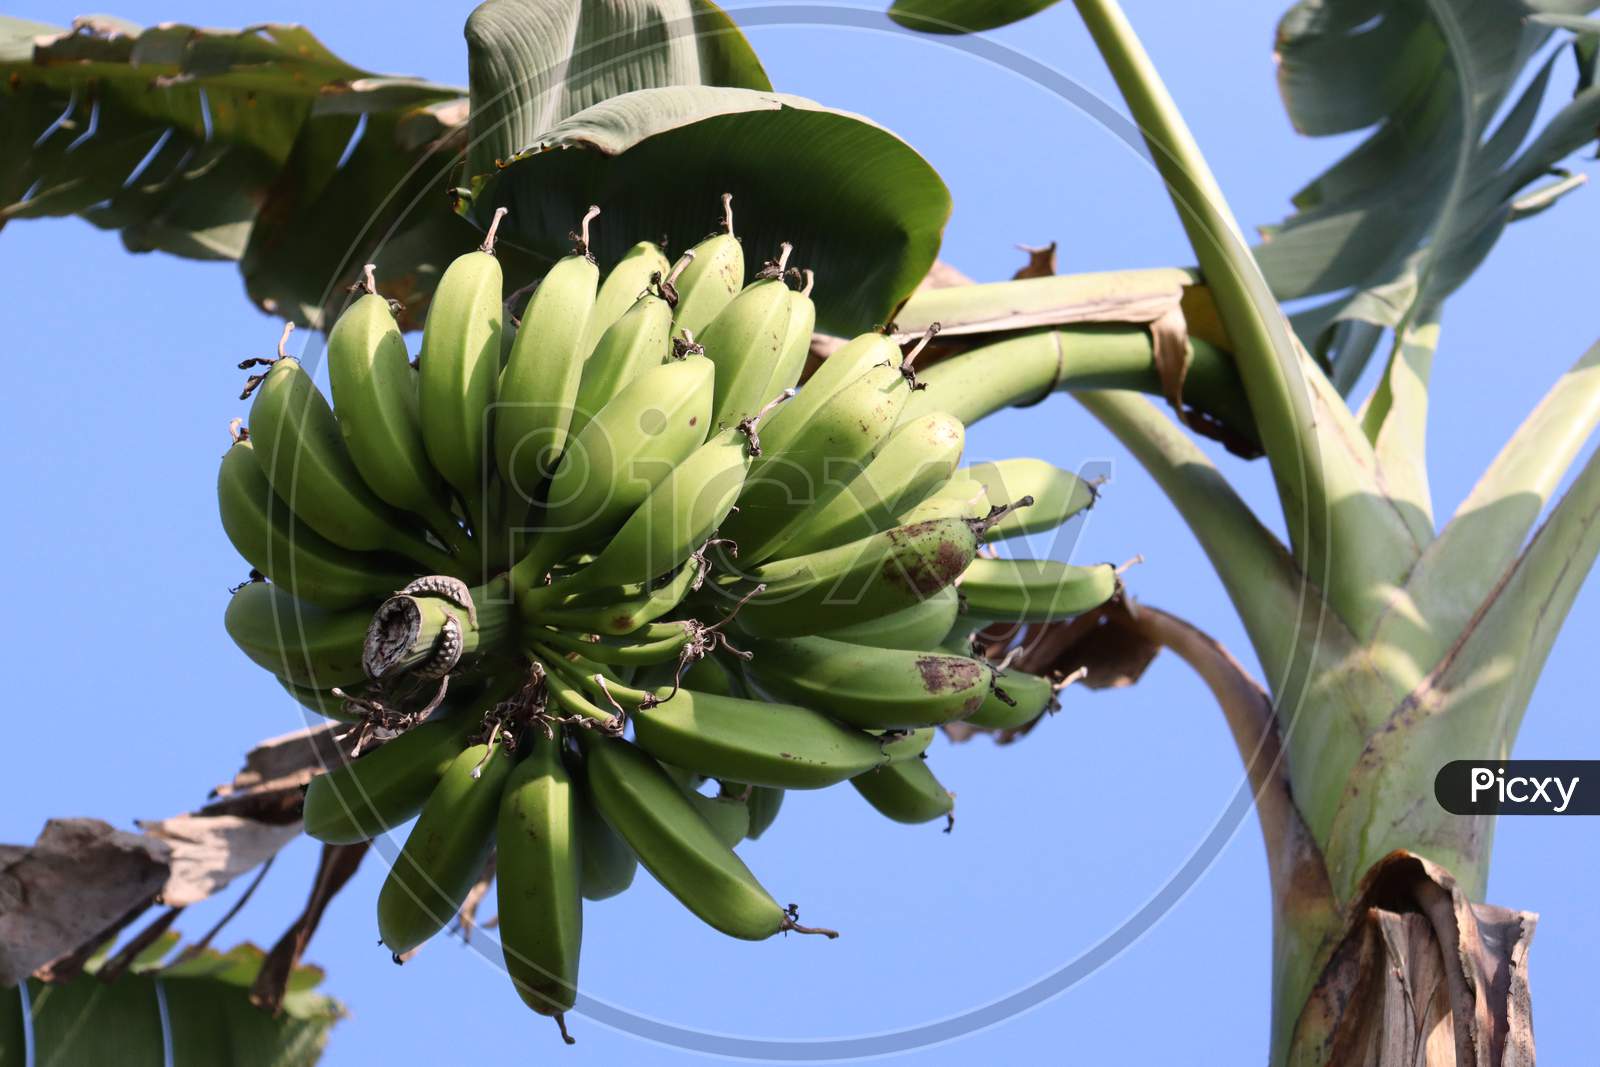 Healthy Raw Banana Bunch On Tree